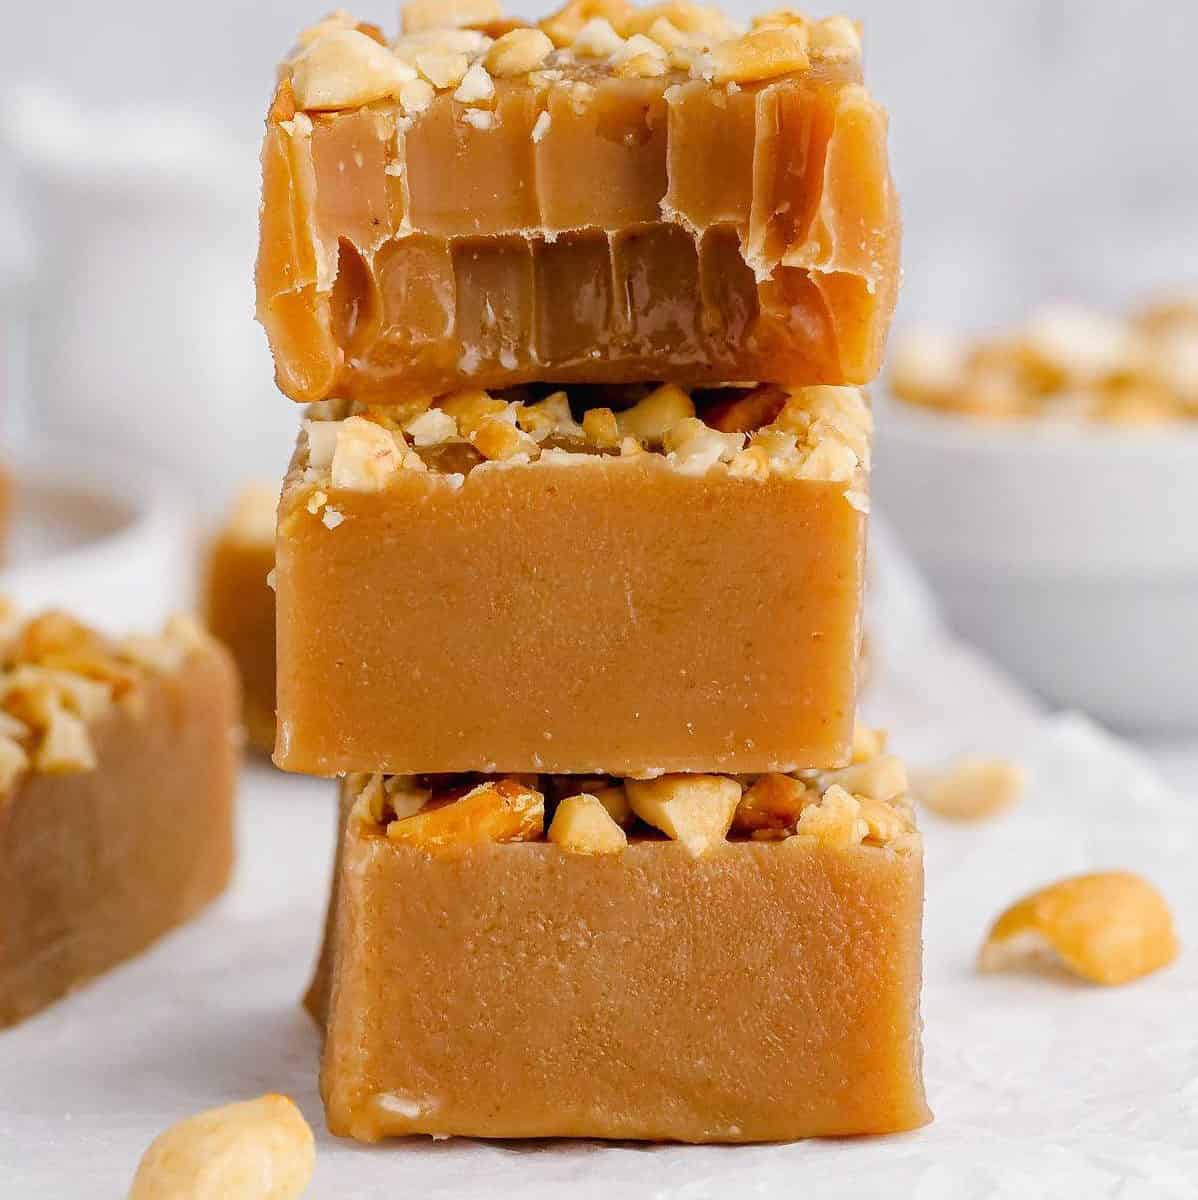  Get your sweet fix with this indulgent Vegan Peanut Butter Fudge!